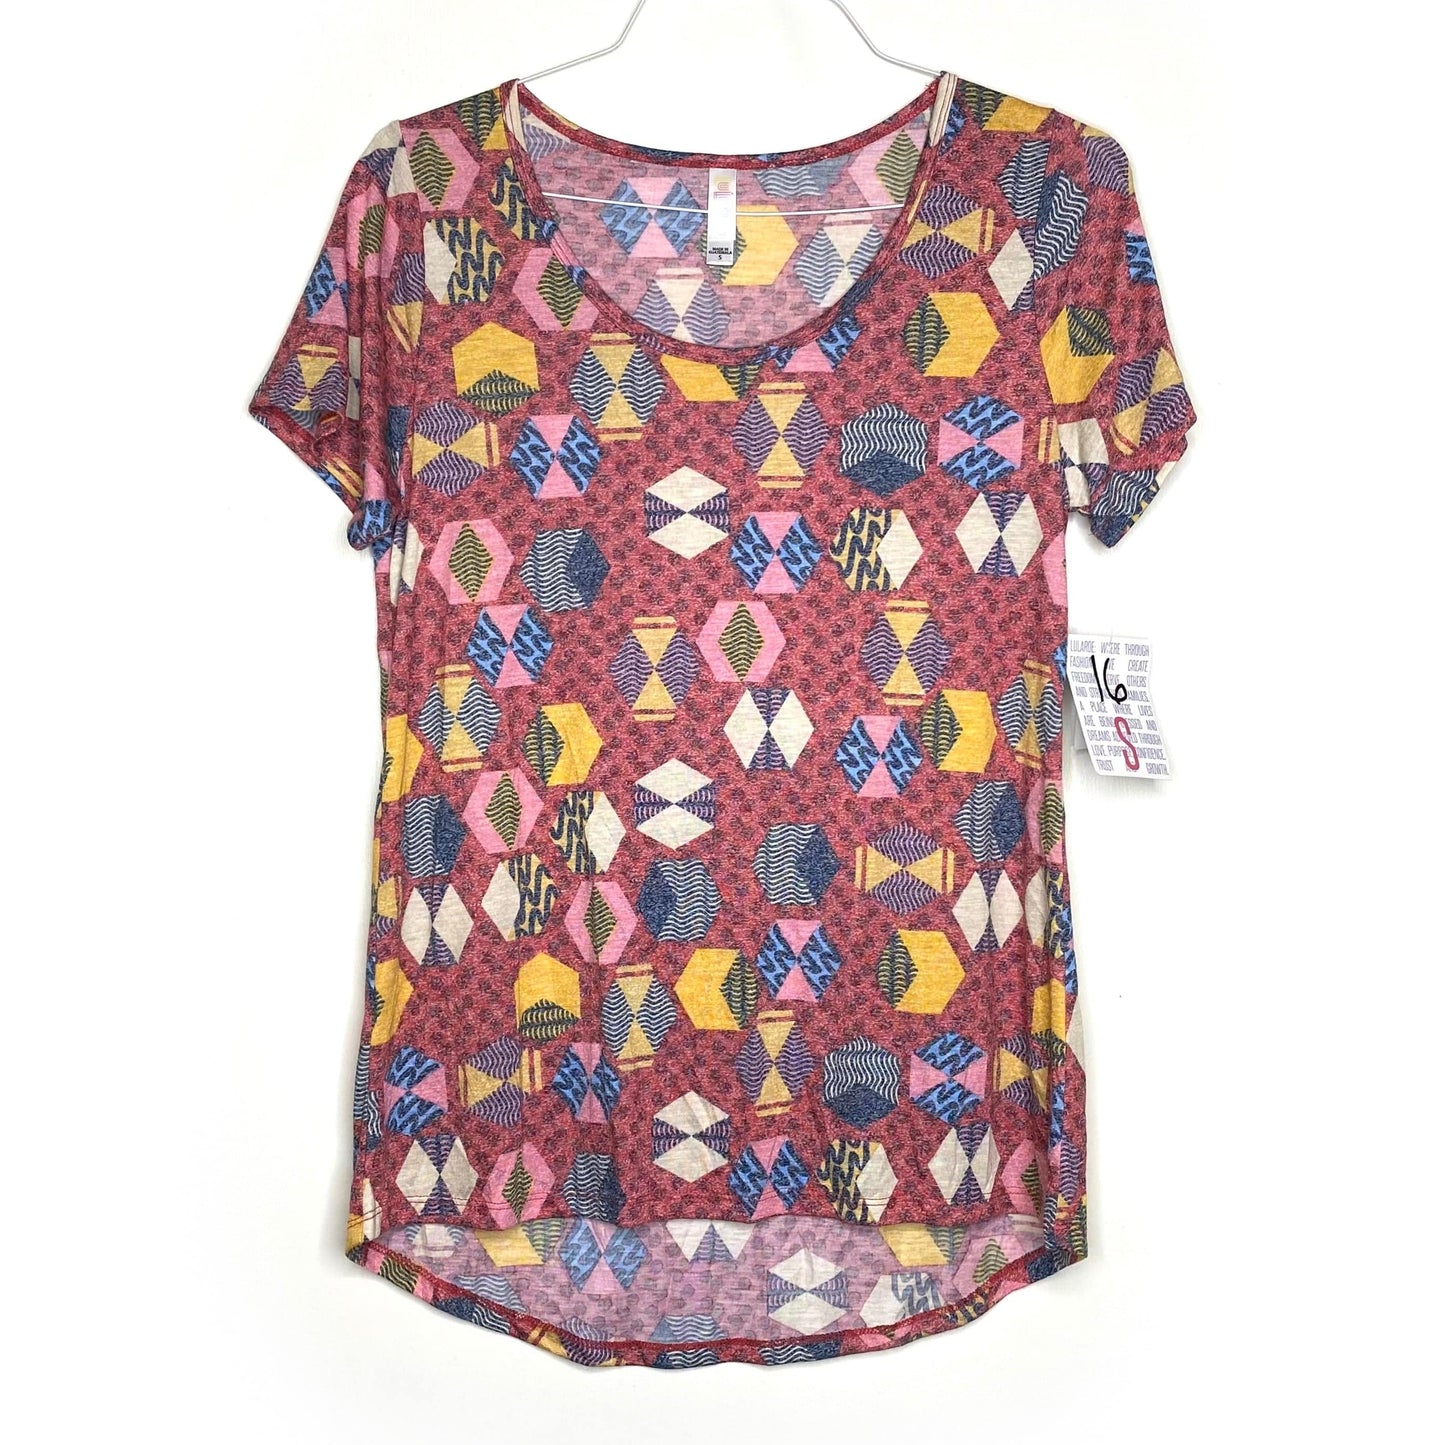 LuLaRoe Womens S Multicolor/Red Classic T Geometric/Spots T-Shirt S/s NWT